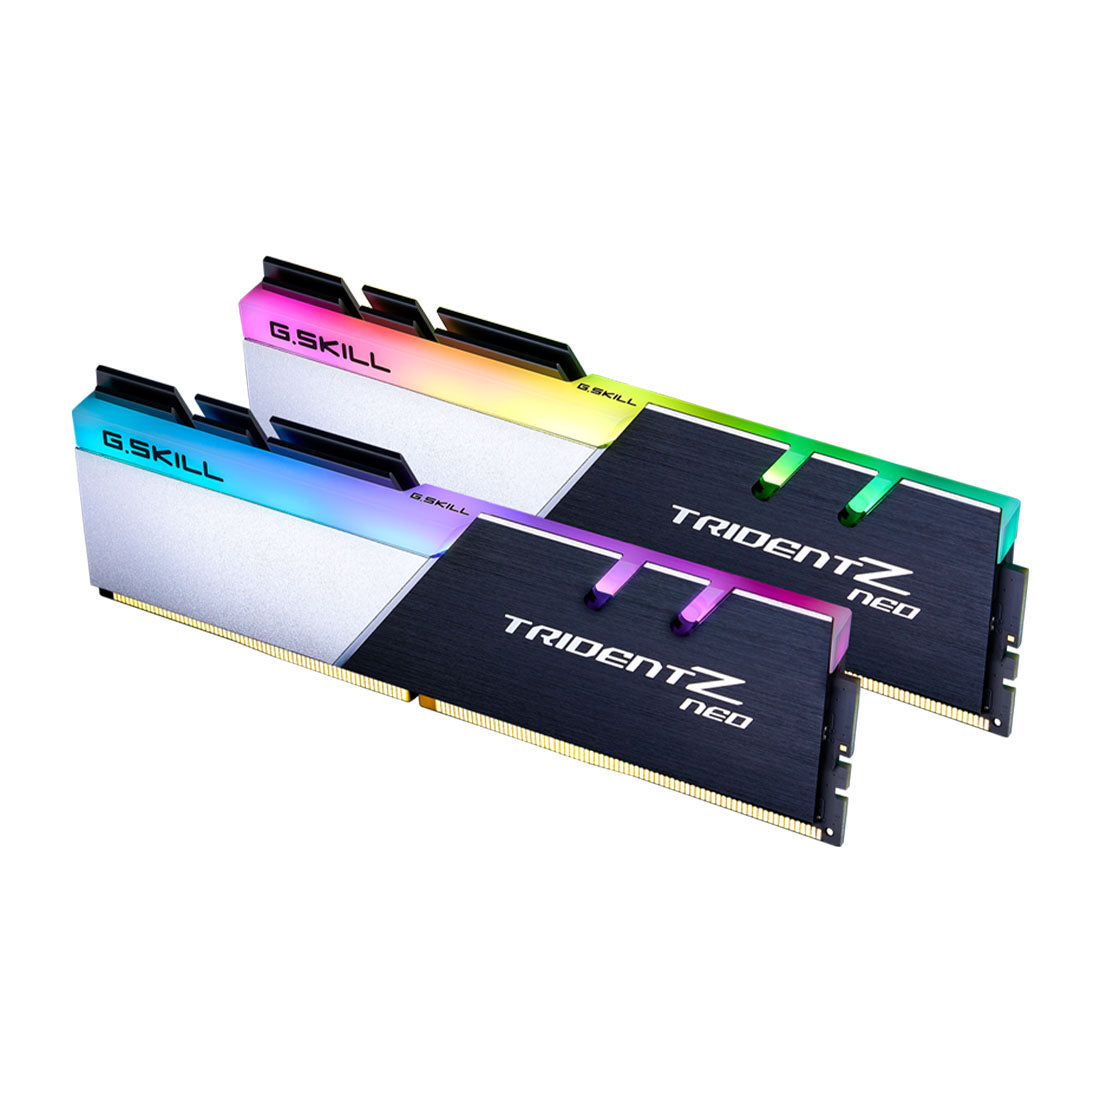 G.SKILL ट्राइडेंट Z नियो RGB 16GB(2 x 8GB) DDR4 RAM 3600MHz डेस्कटॉप मेमोरी 